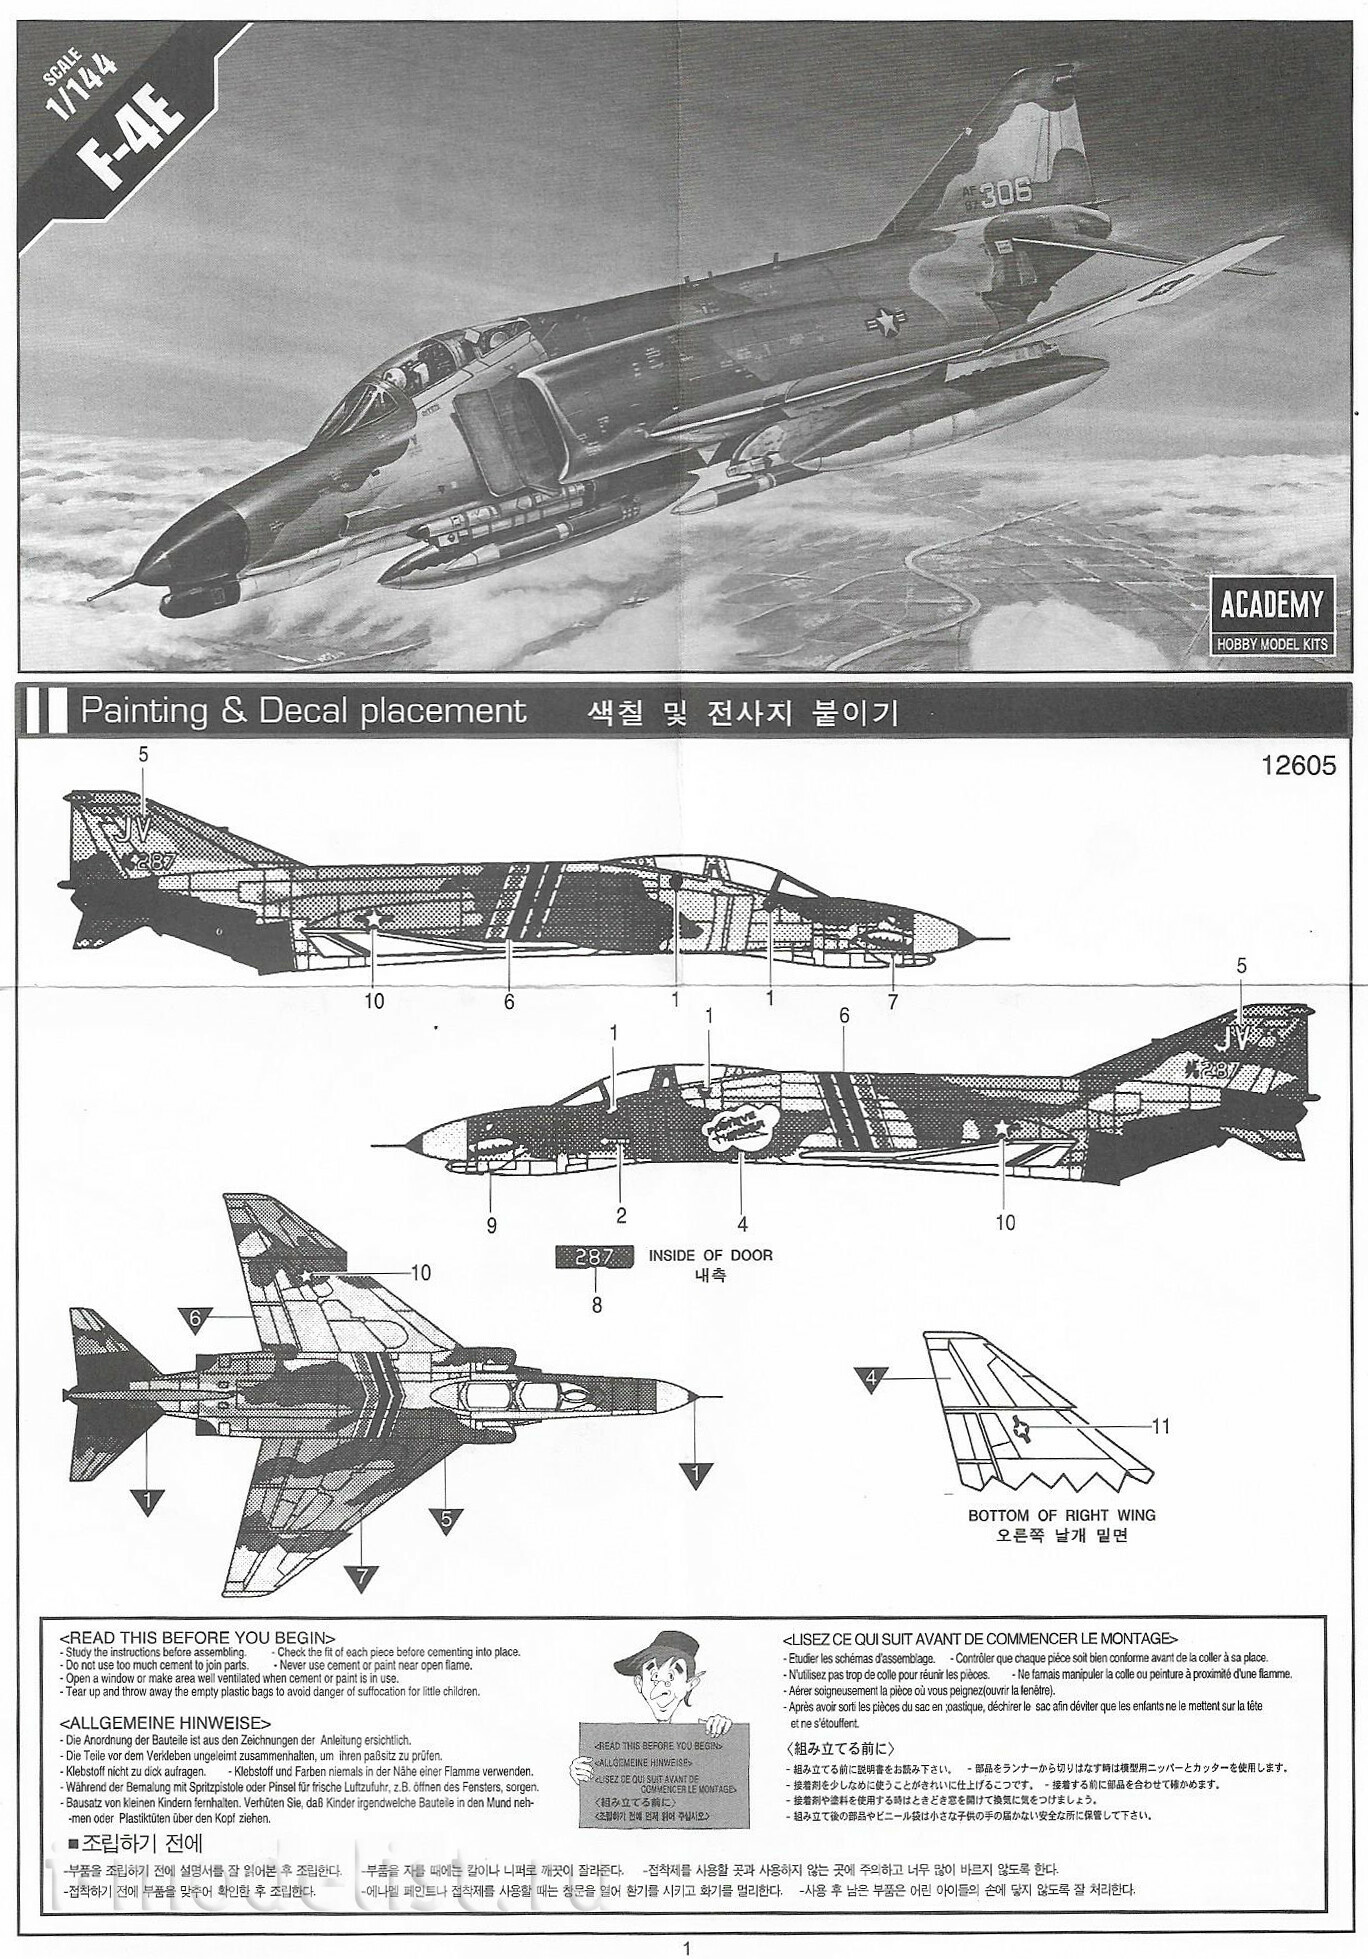 12605 Academy 1/144 F4E Phantom II